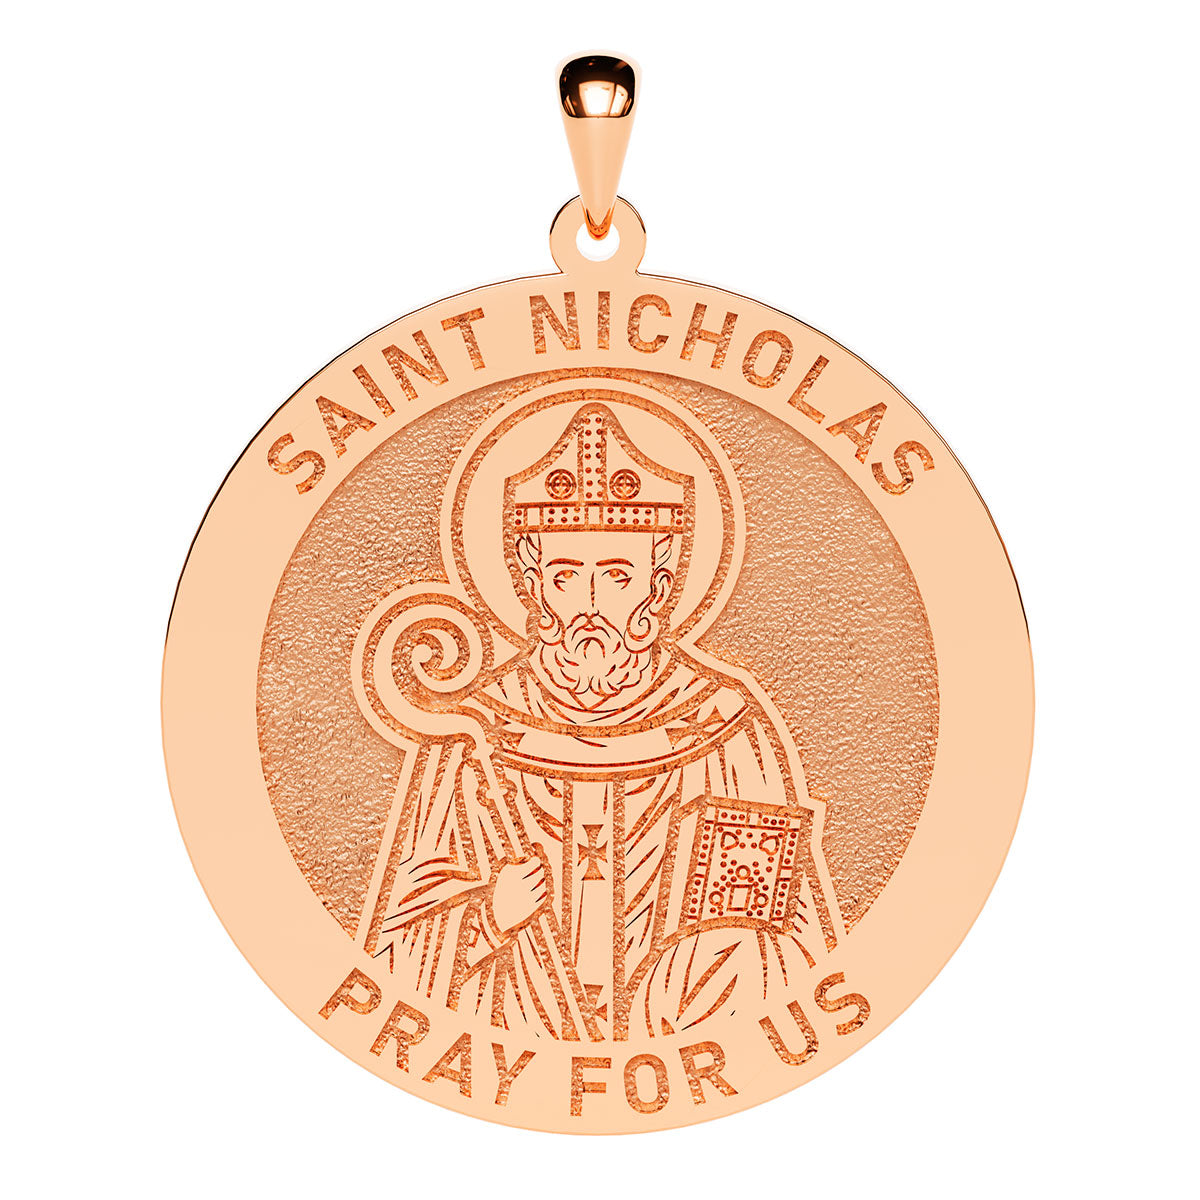 Saint Nicholas Round Religious Medal